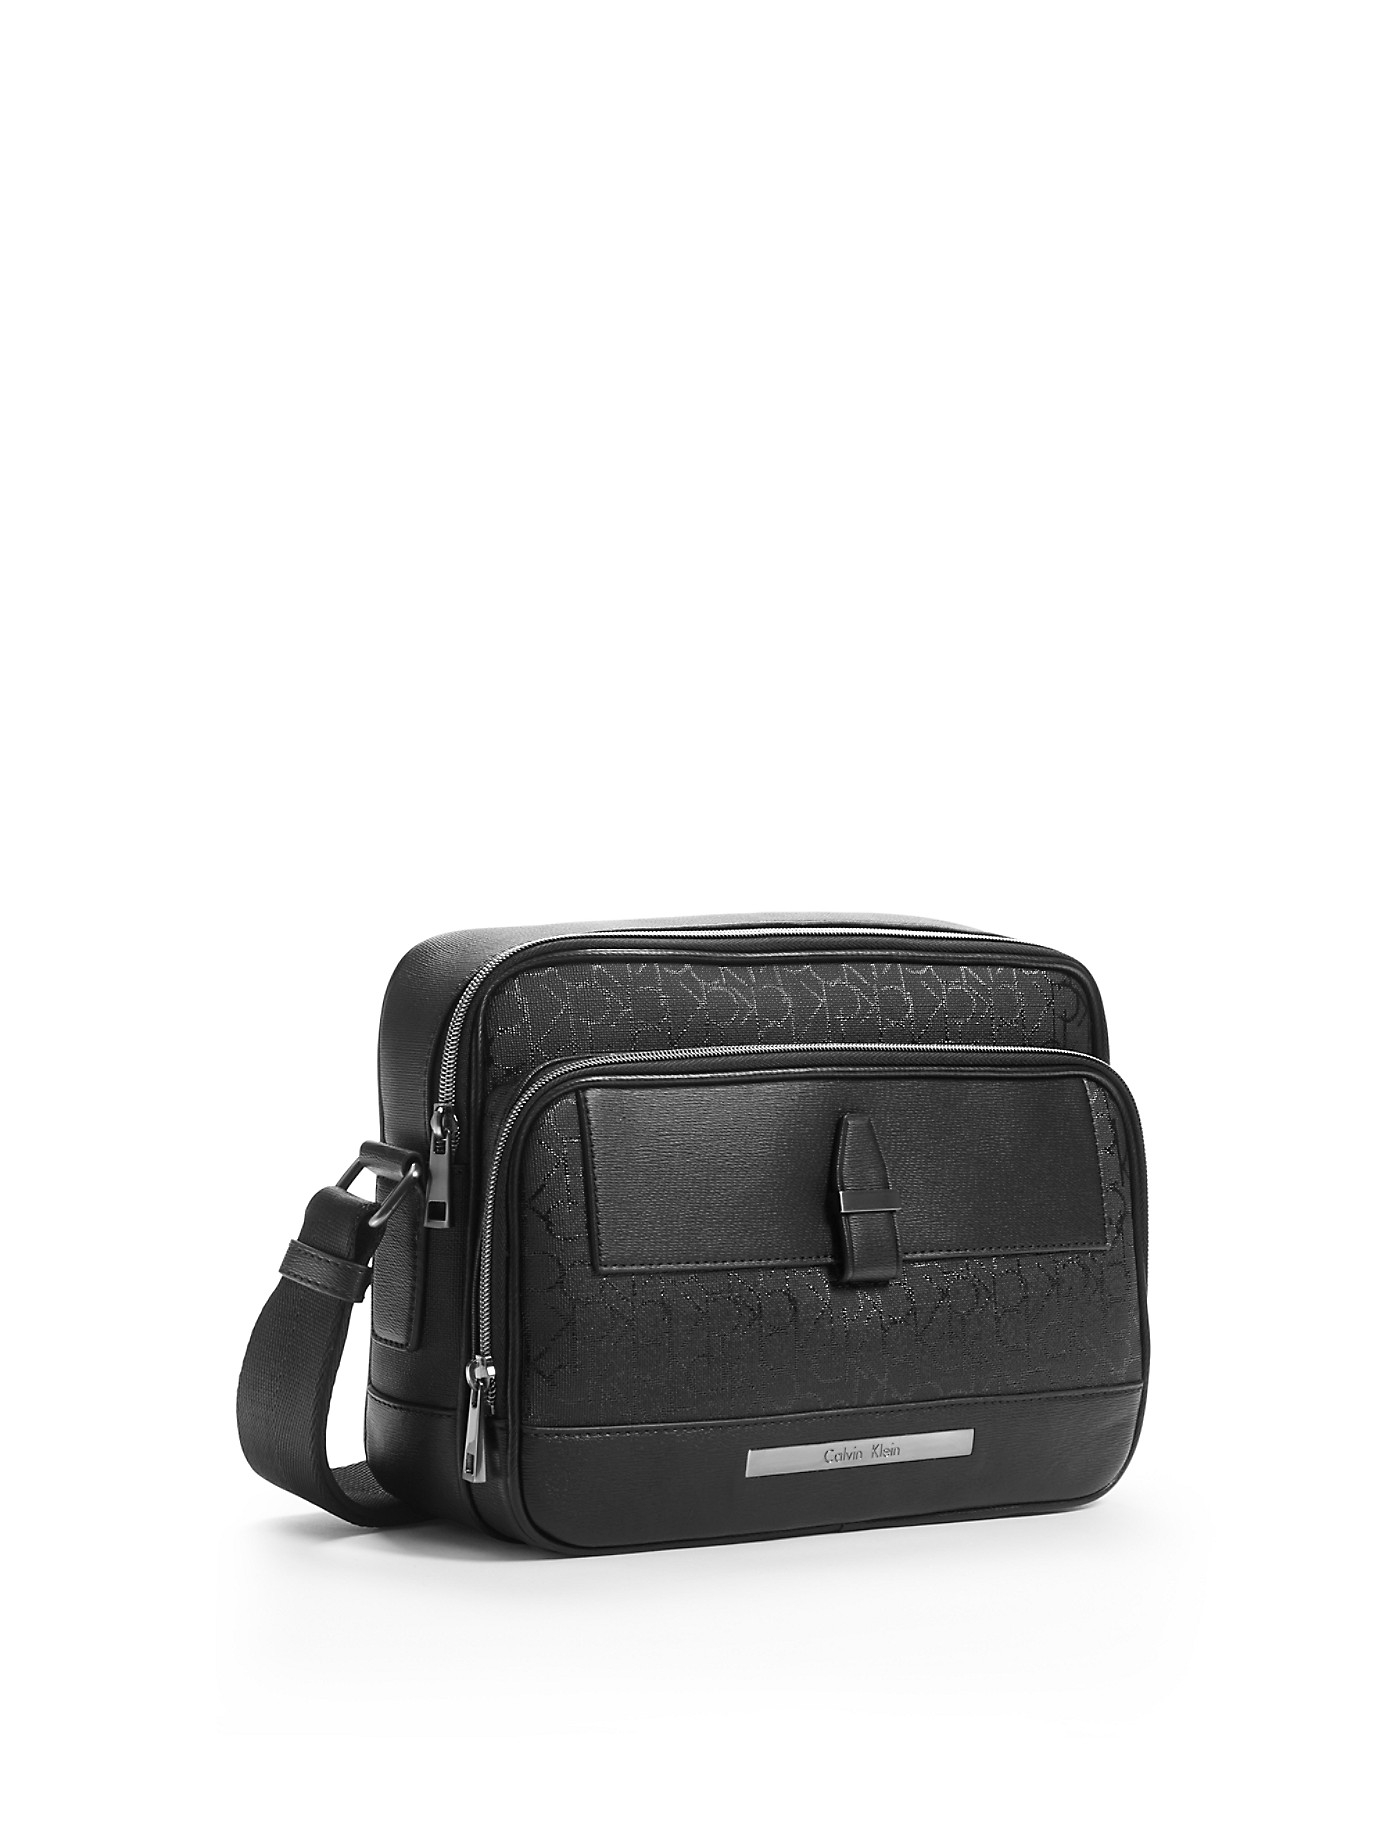 Lyst - Calvin Klein White Label Ck Coated Camera Bag in Black